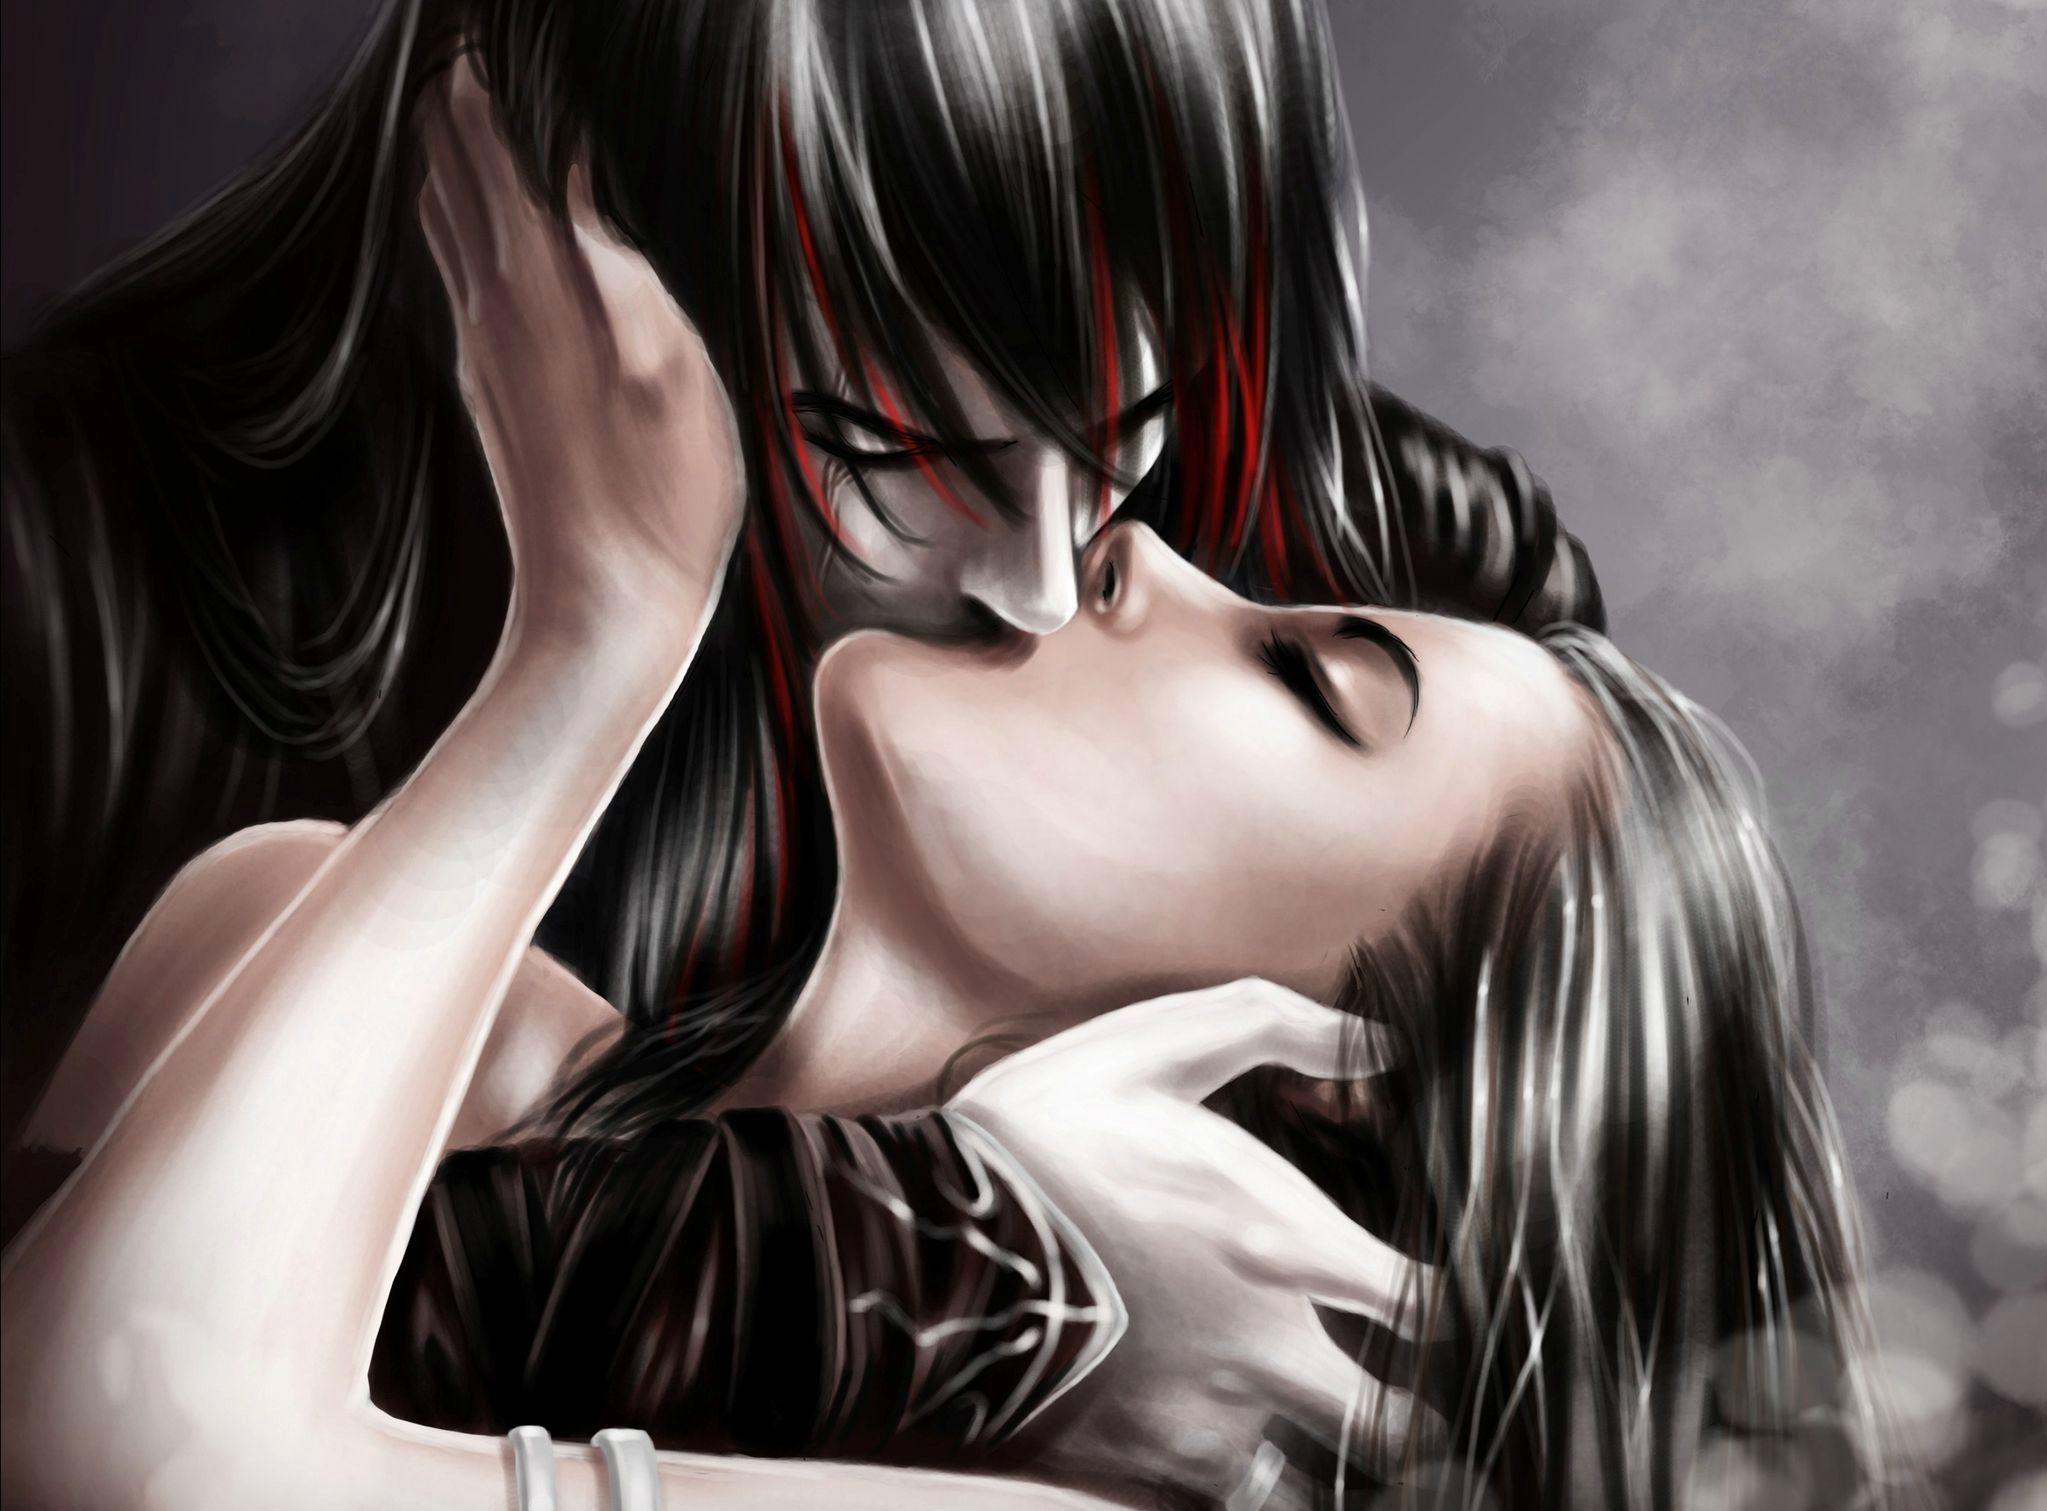 Anime Reiji Vampire Hickey Kiss GIF | GIFDB.com